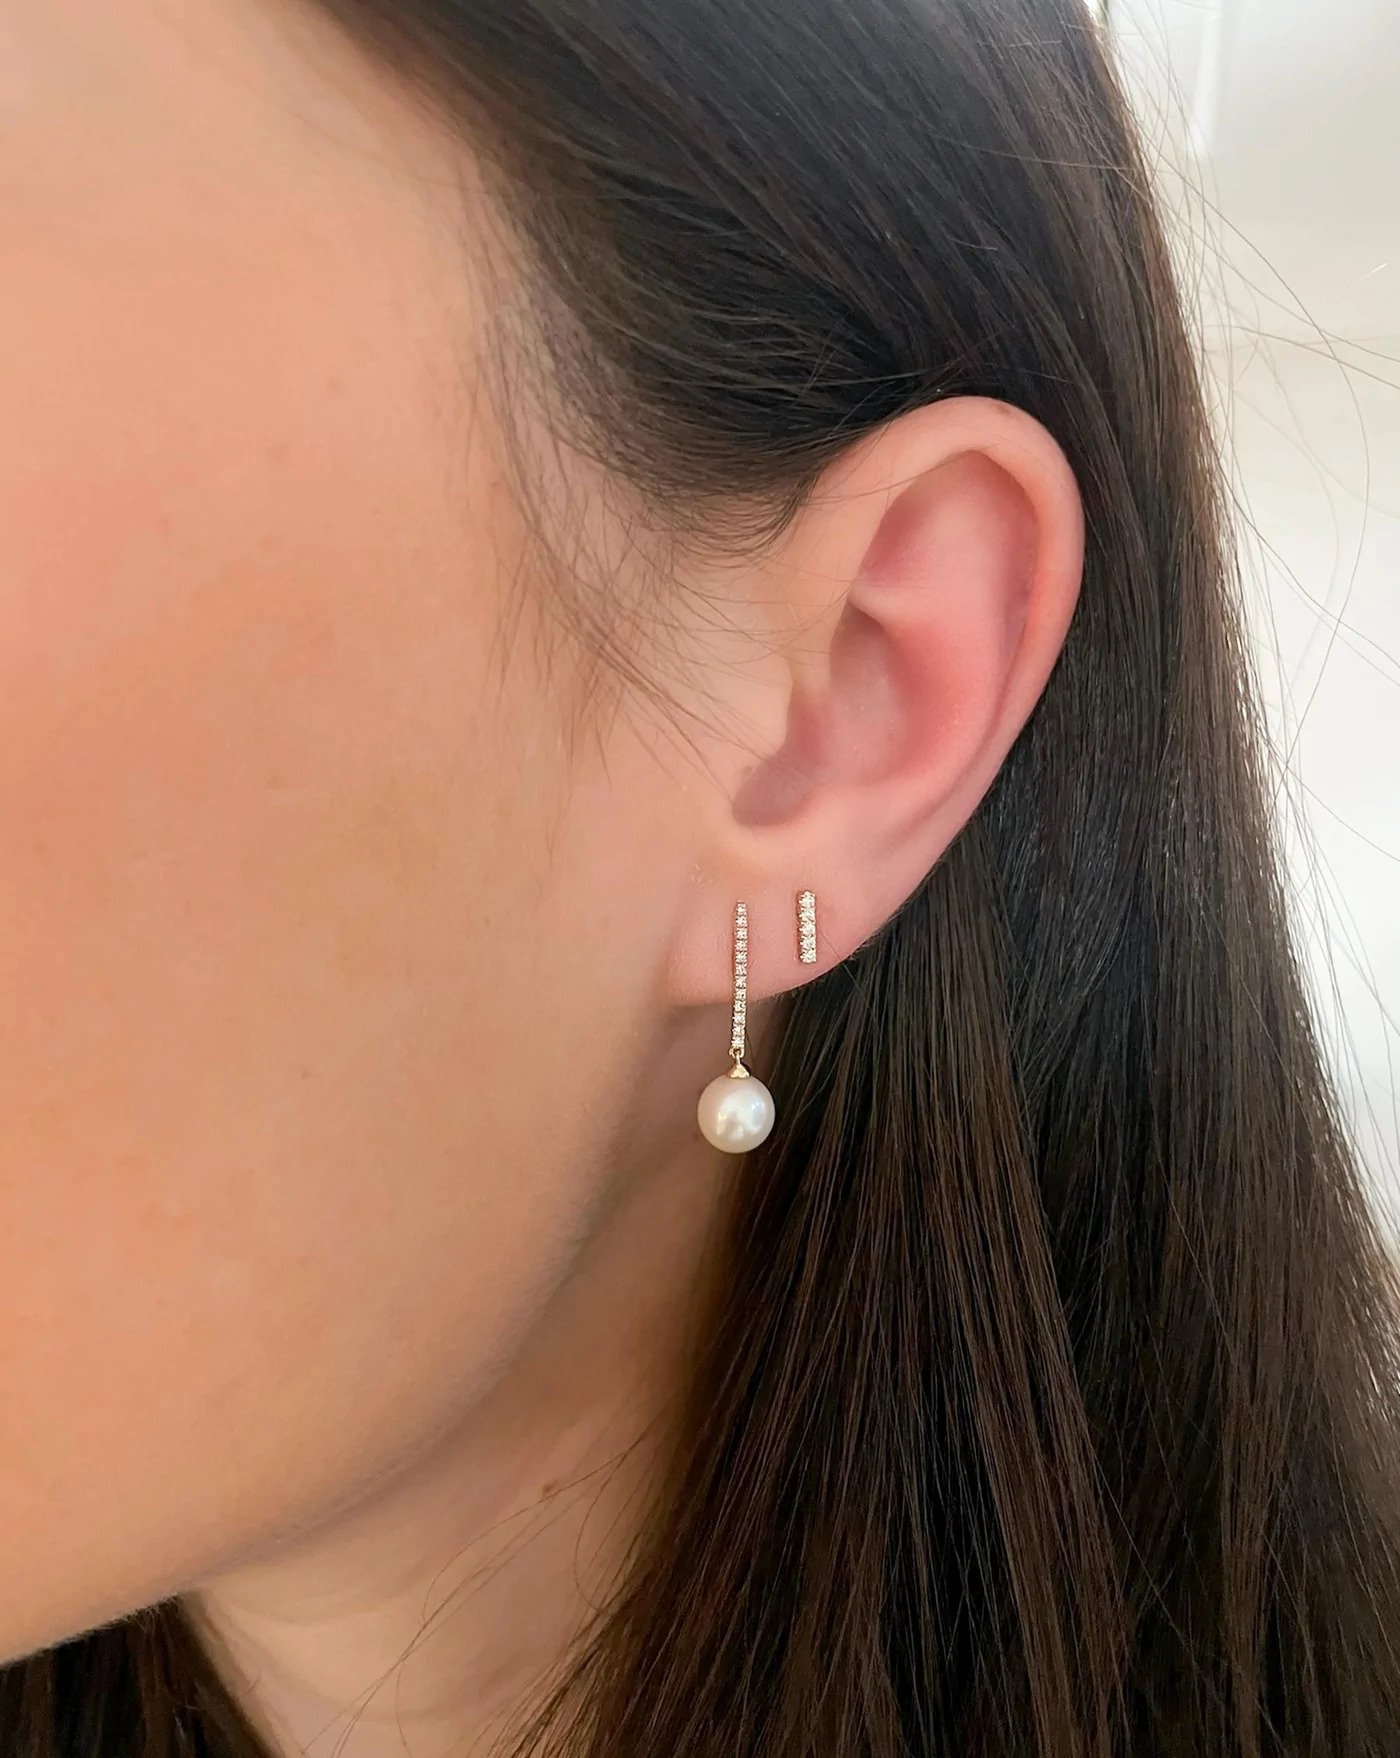 Tiffany & Co. Diamond and Pearl Earrings